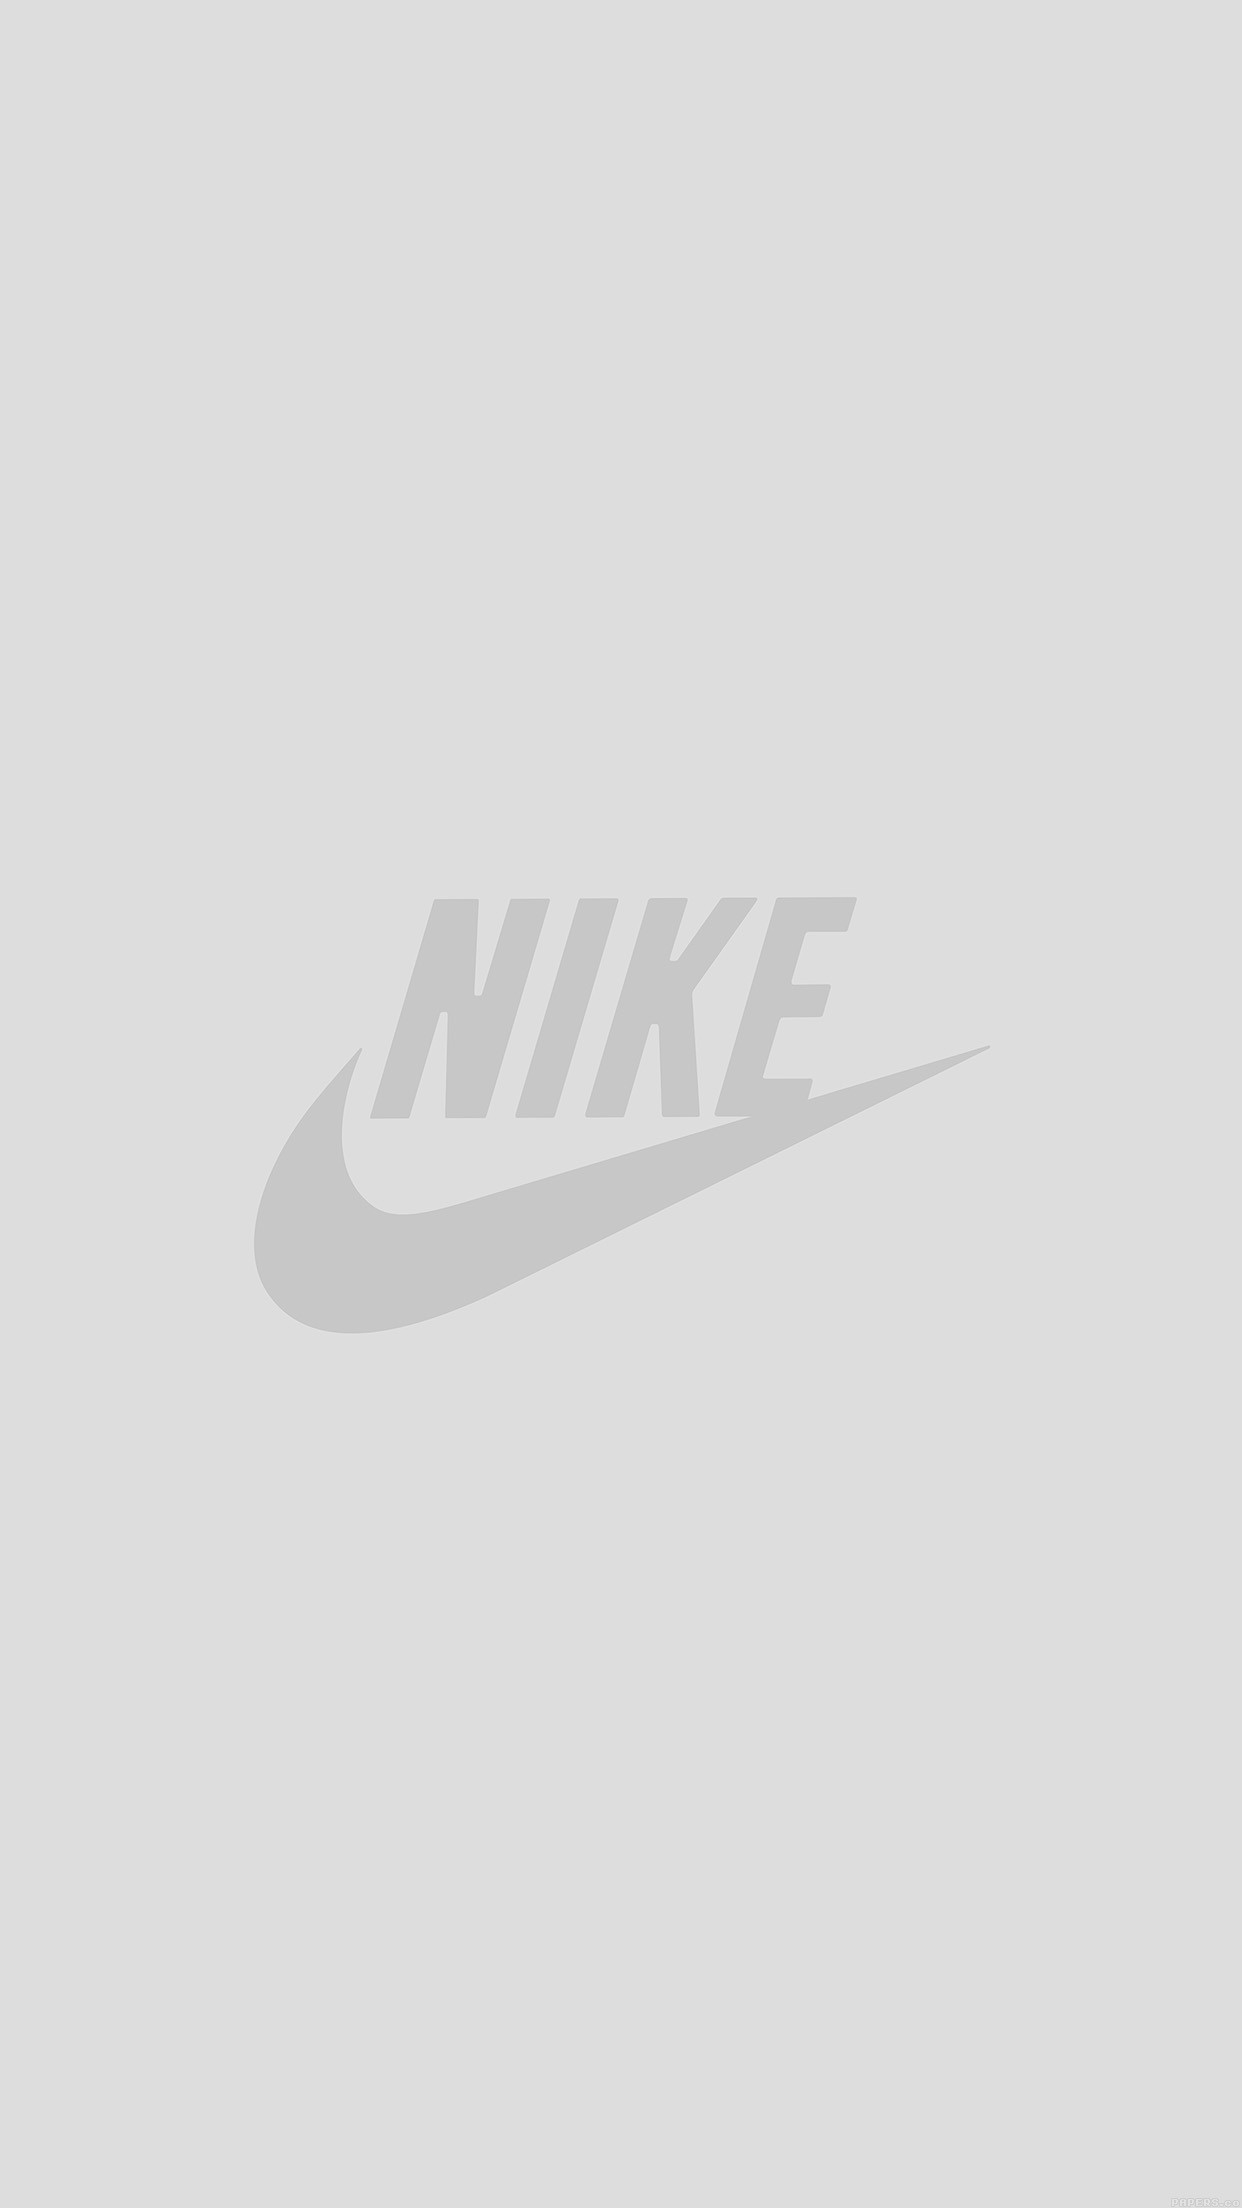 Black And White Nike Logo Wallpaper